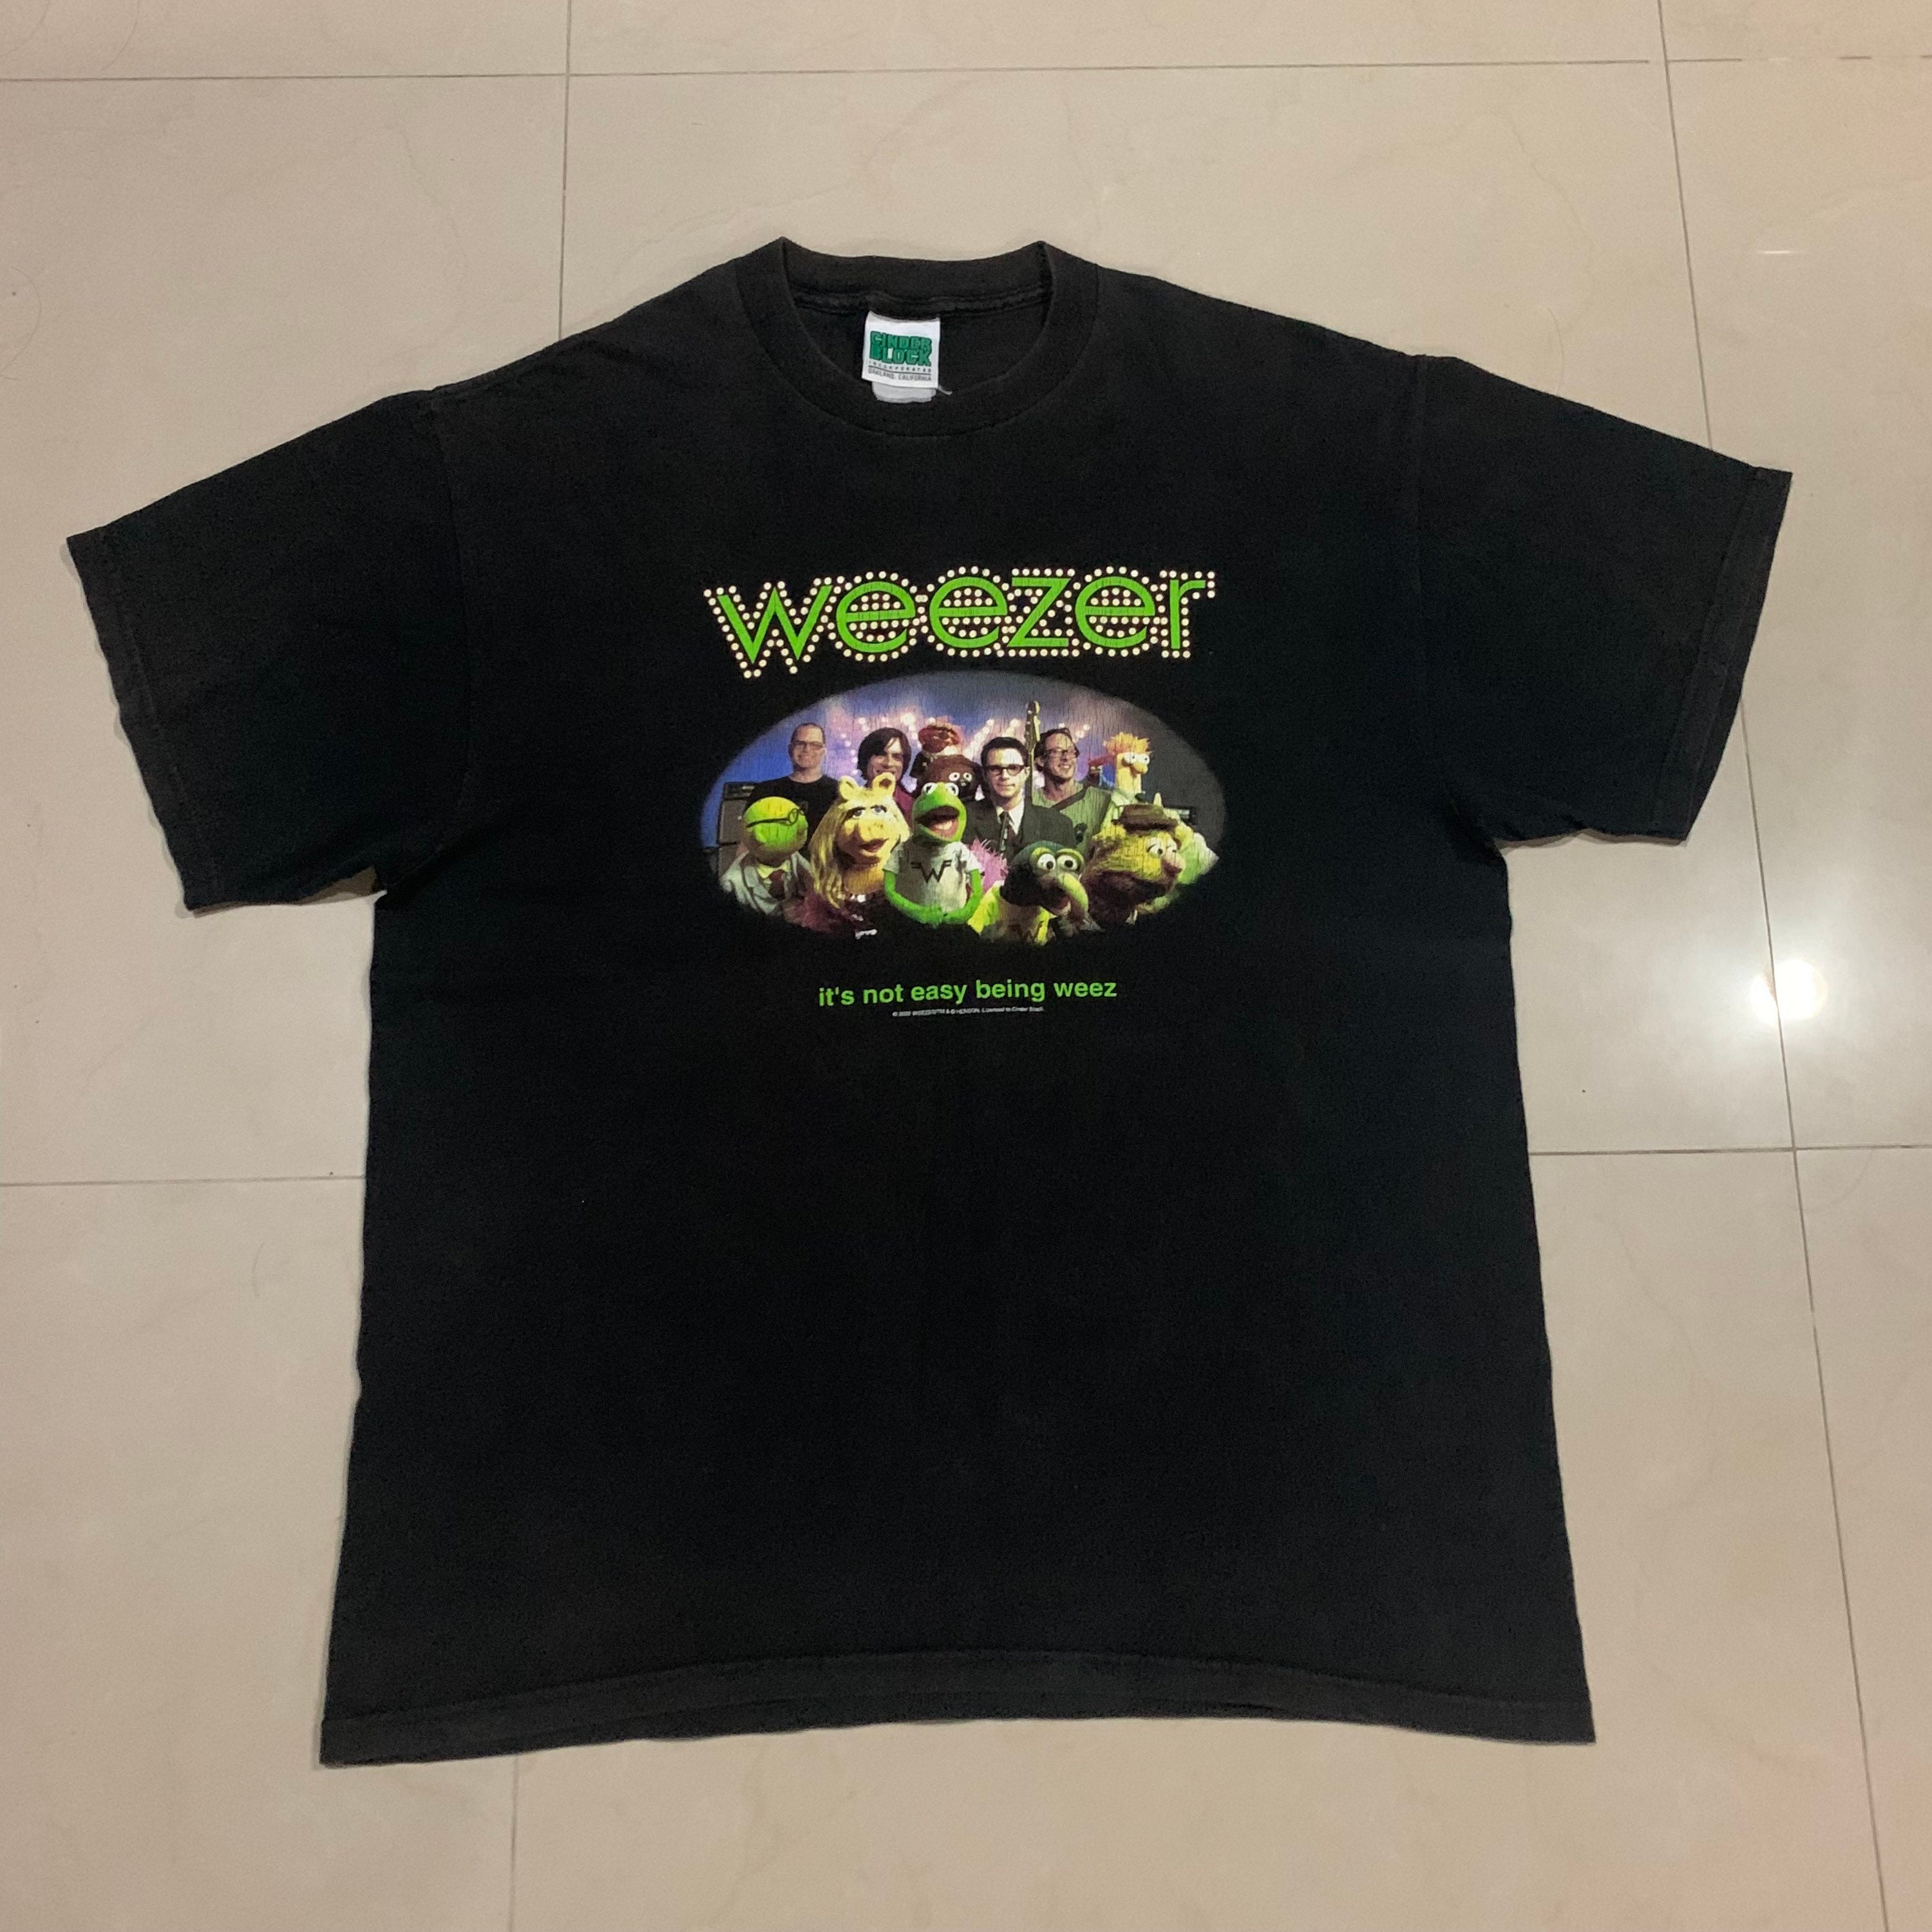 Weezer Vintage Green Album Kermit Muppets Shirt 2002 Aint | Etsy